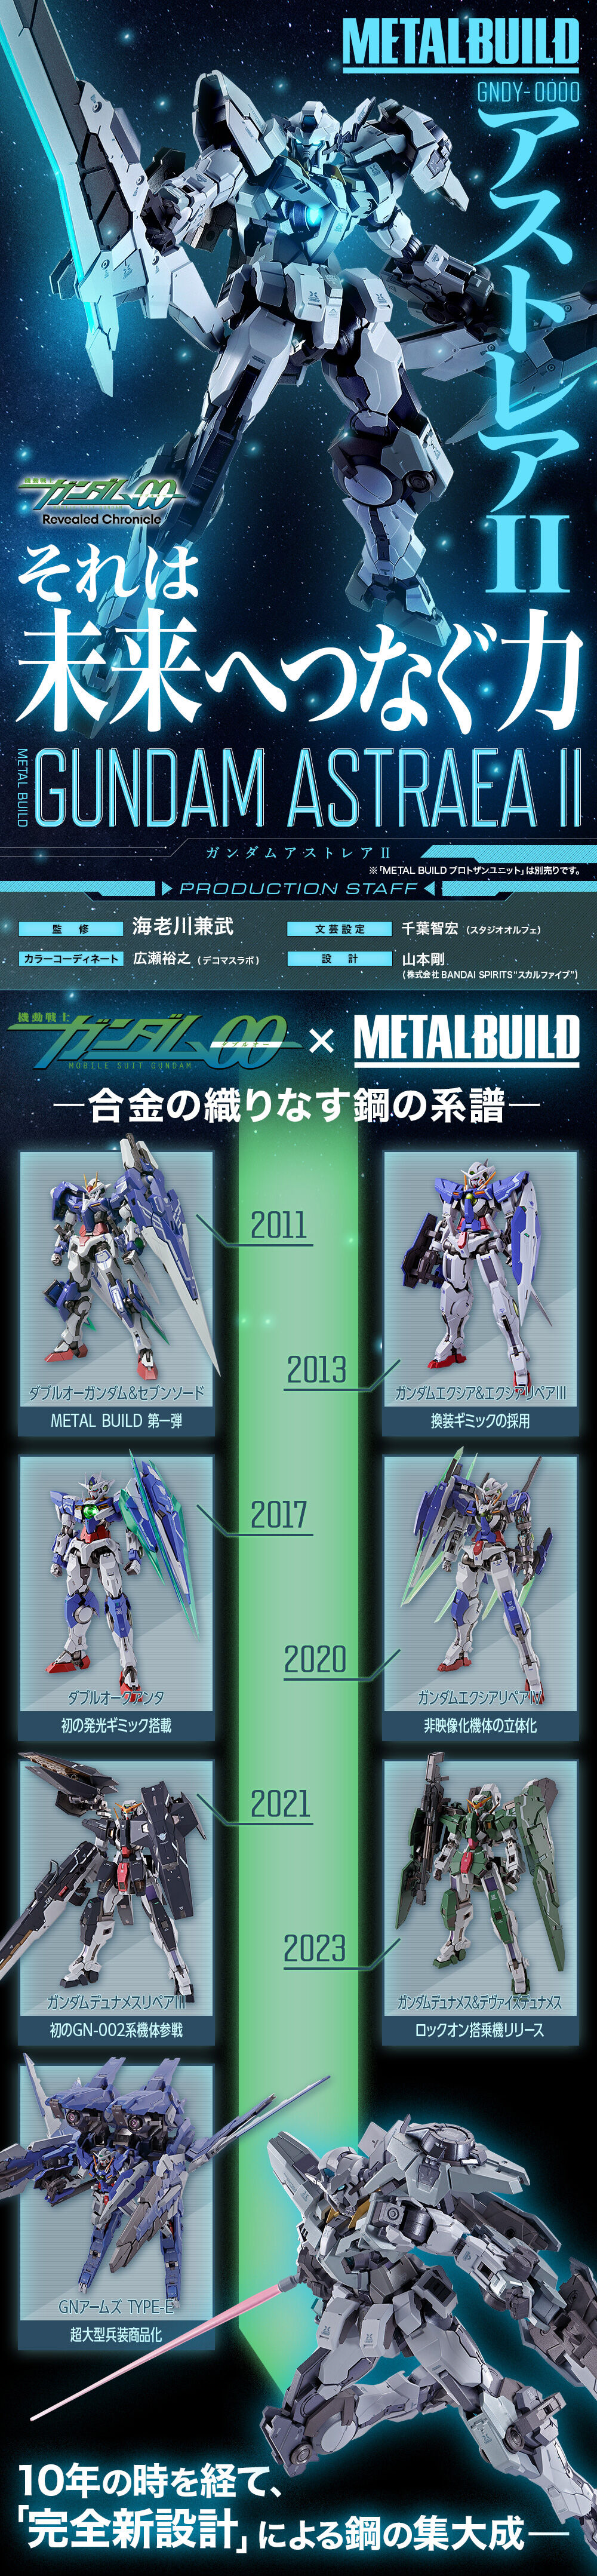 METAL BUILD Gundam Astraea II Action Figure